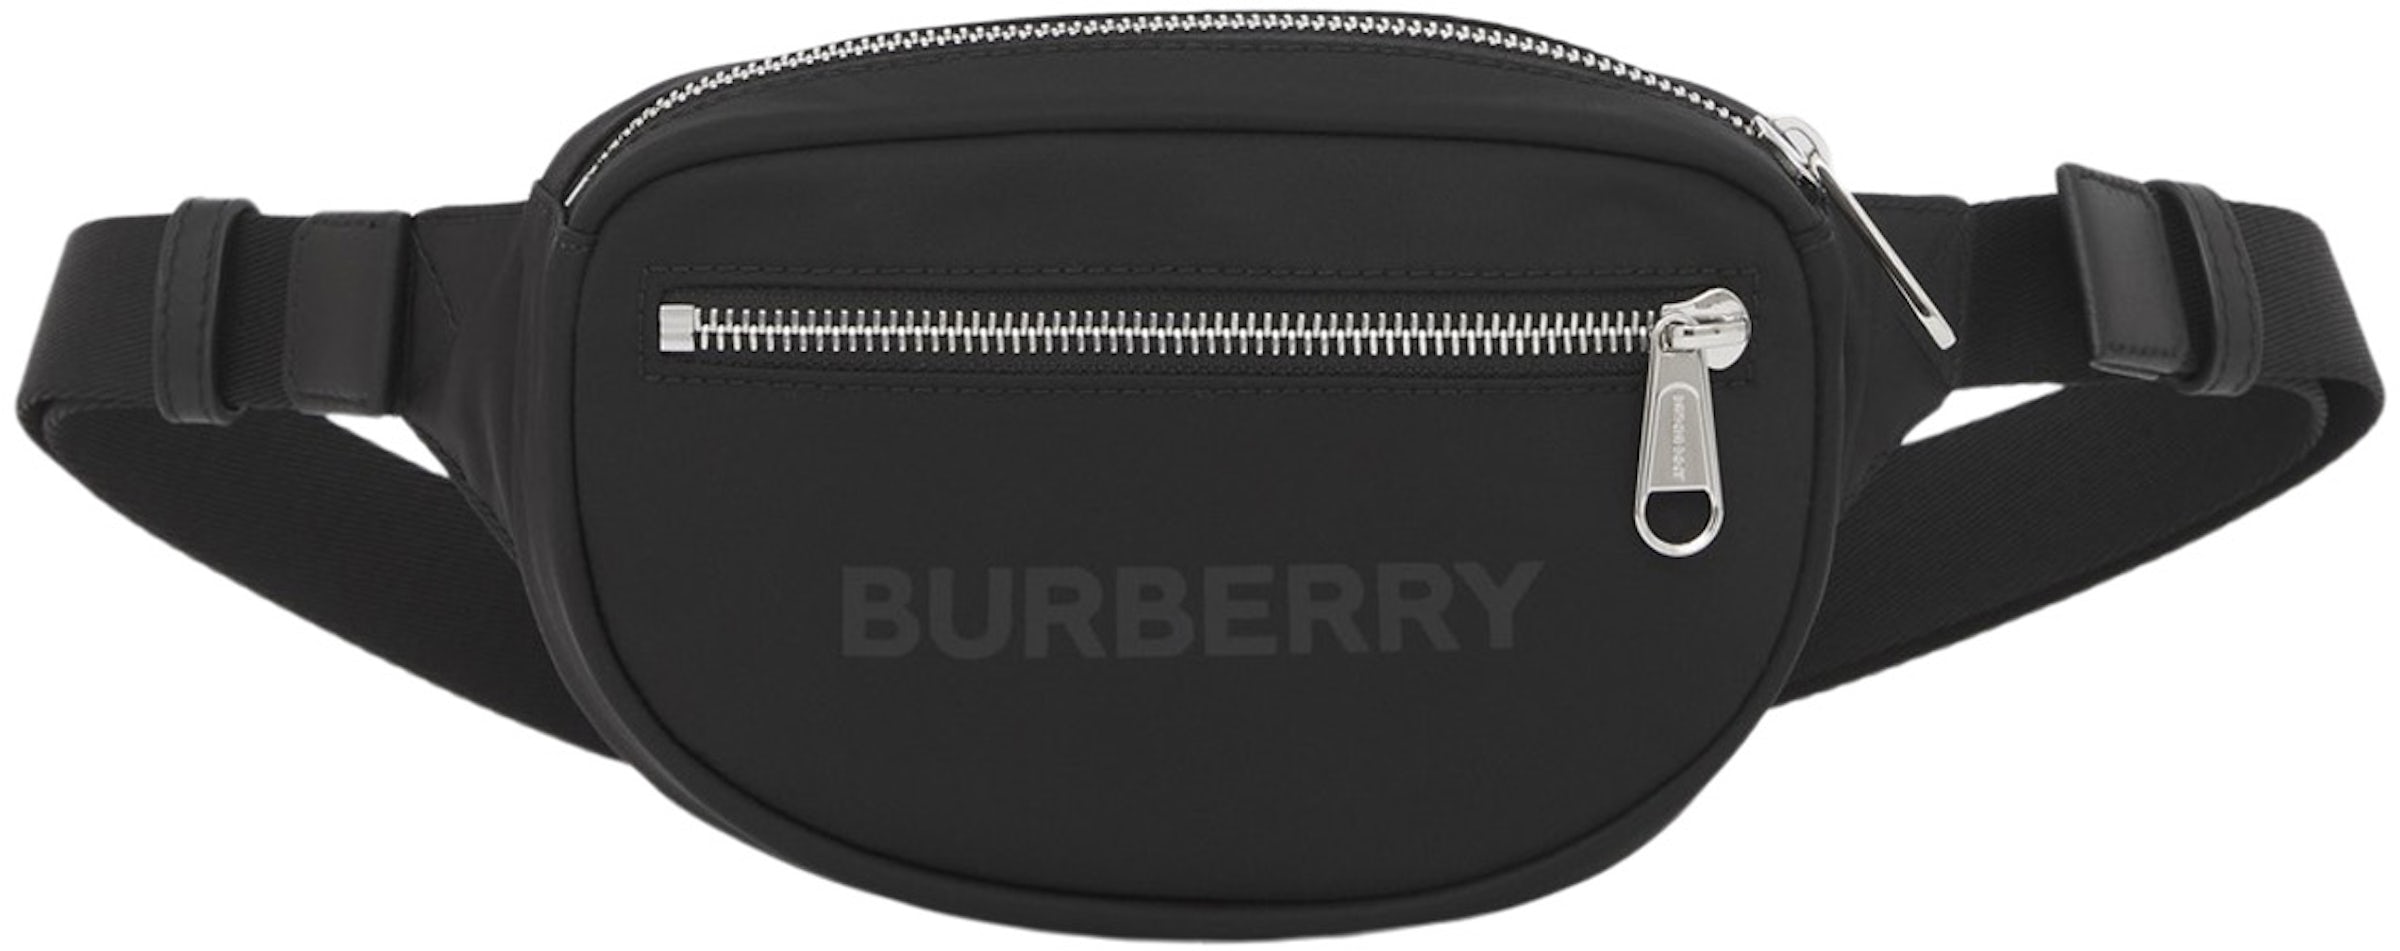 UNUSED BURBERRY 8032395 TB Small Monogram Cannon Bum Bag Waist pouch body  bag